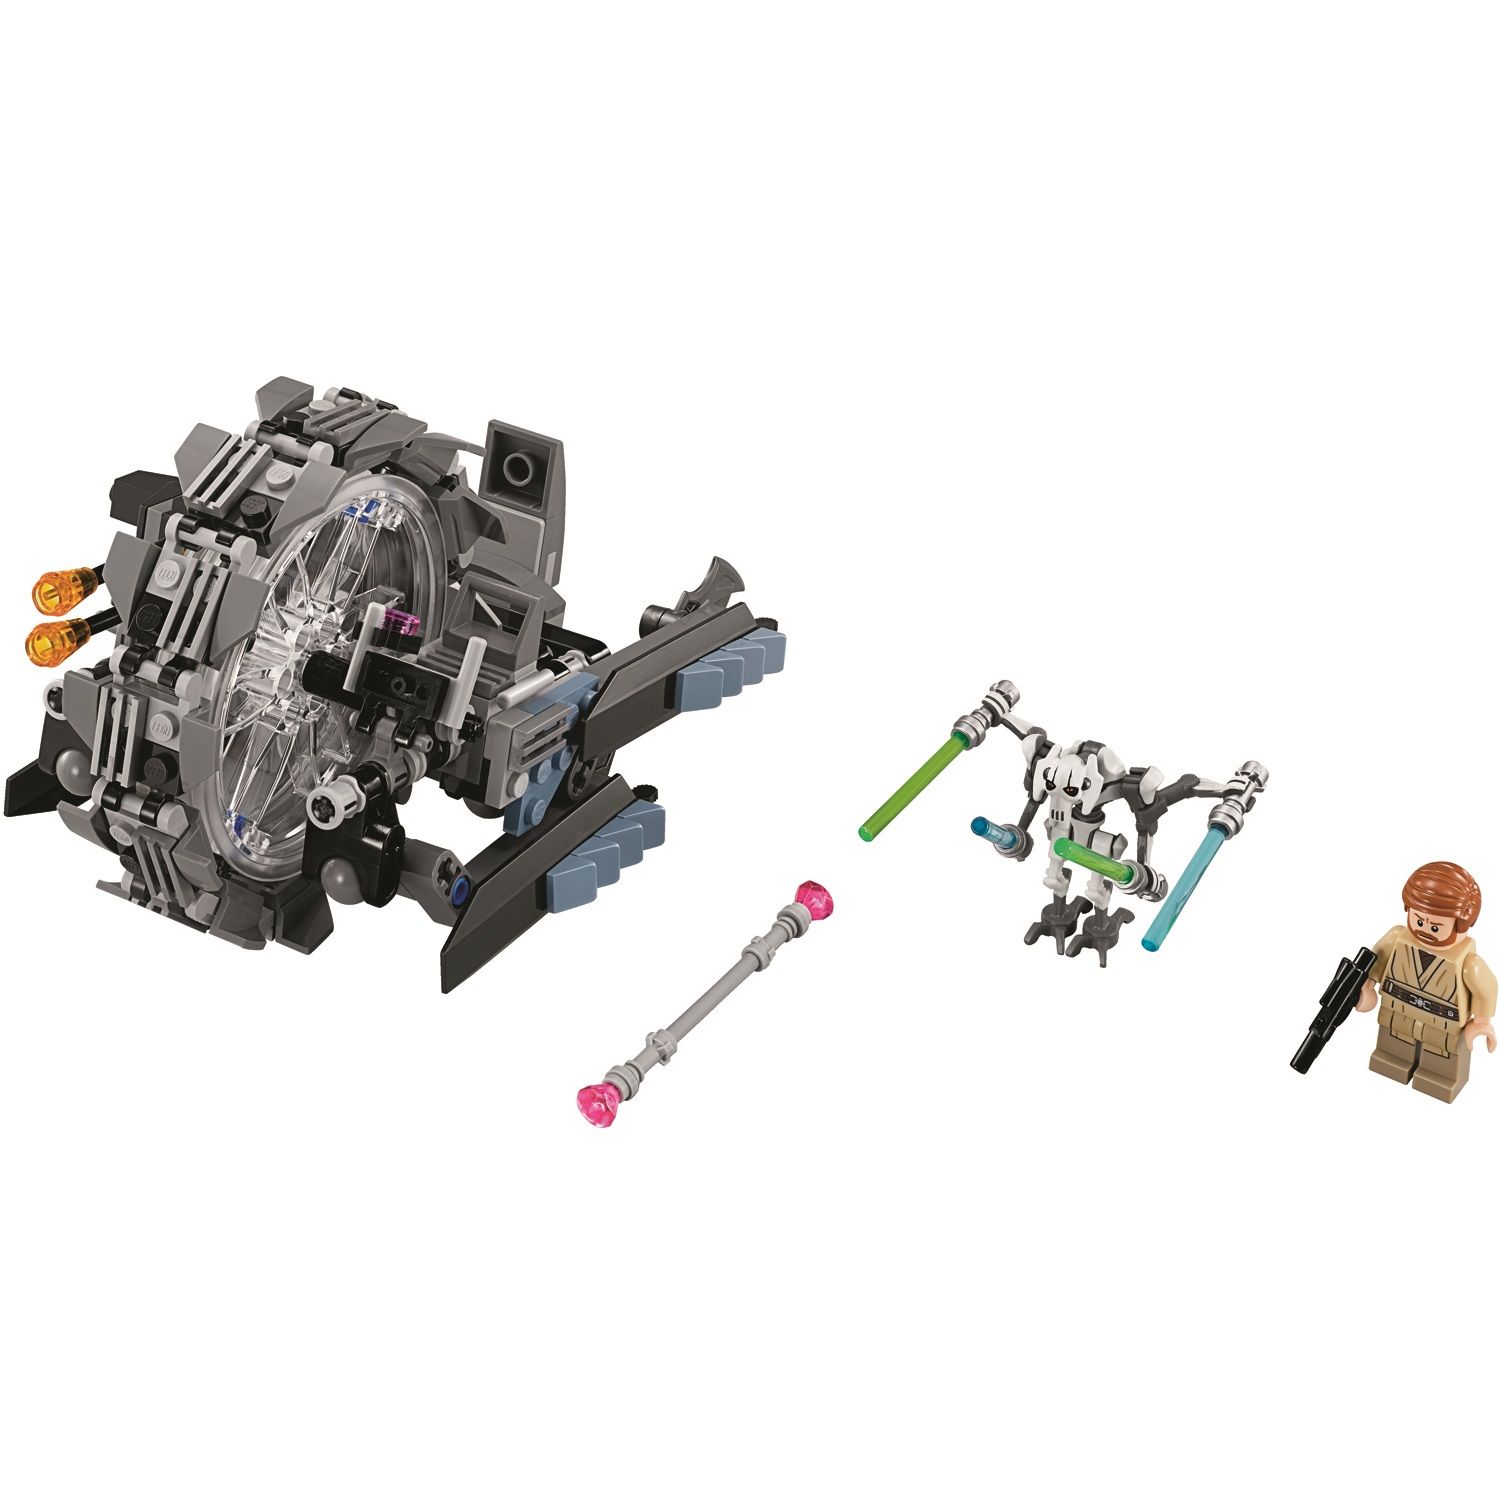  Set de constructie LEGO Star Wars - General Grievous` Wheel Bike 75040 